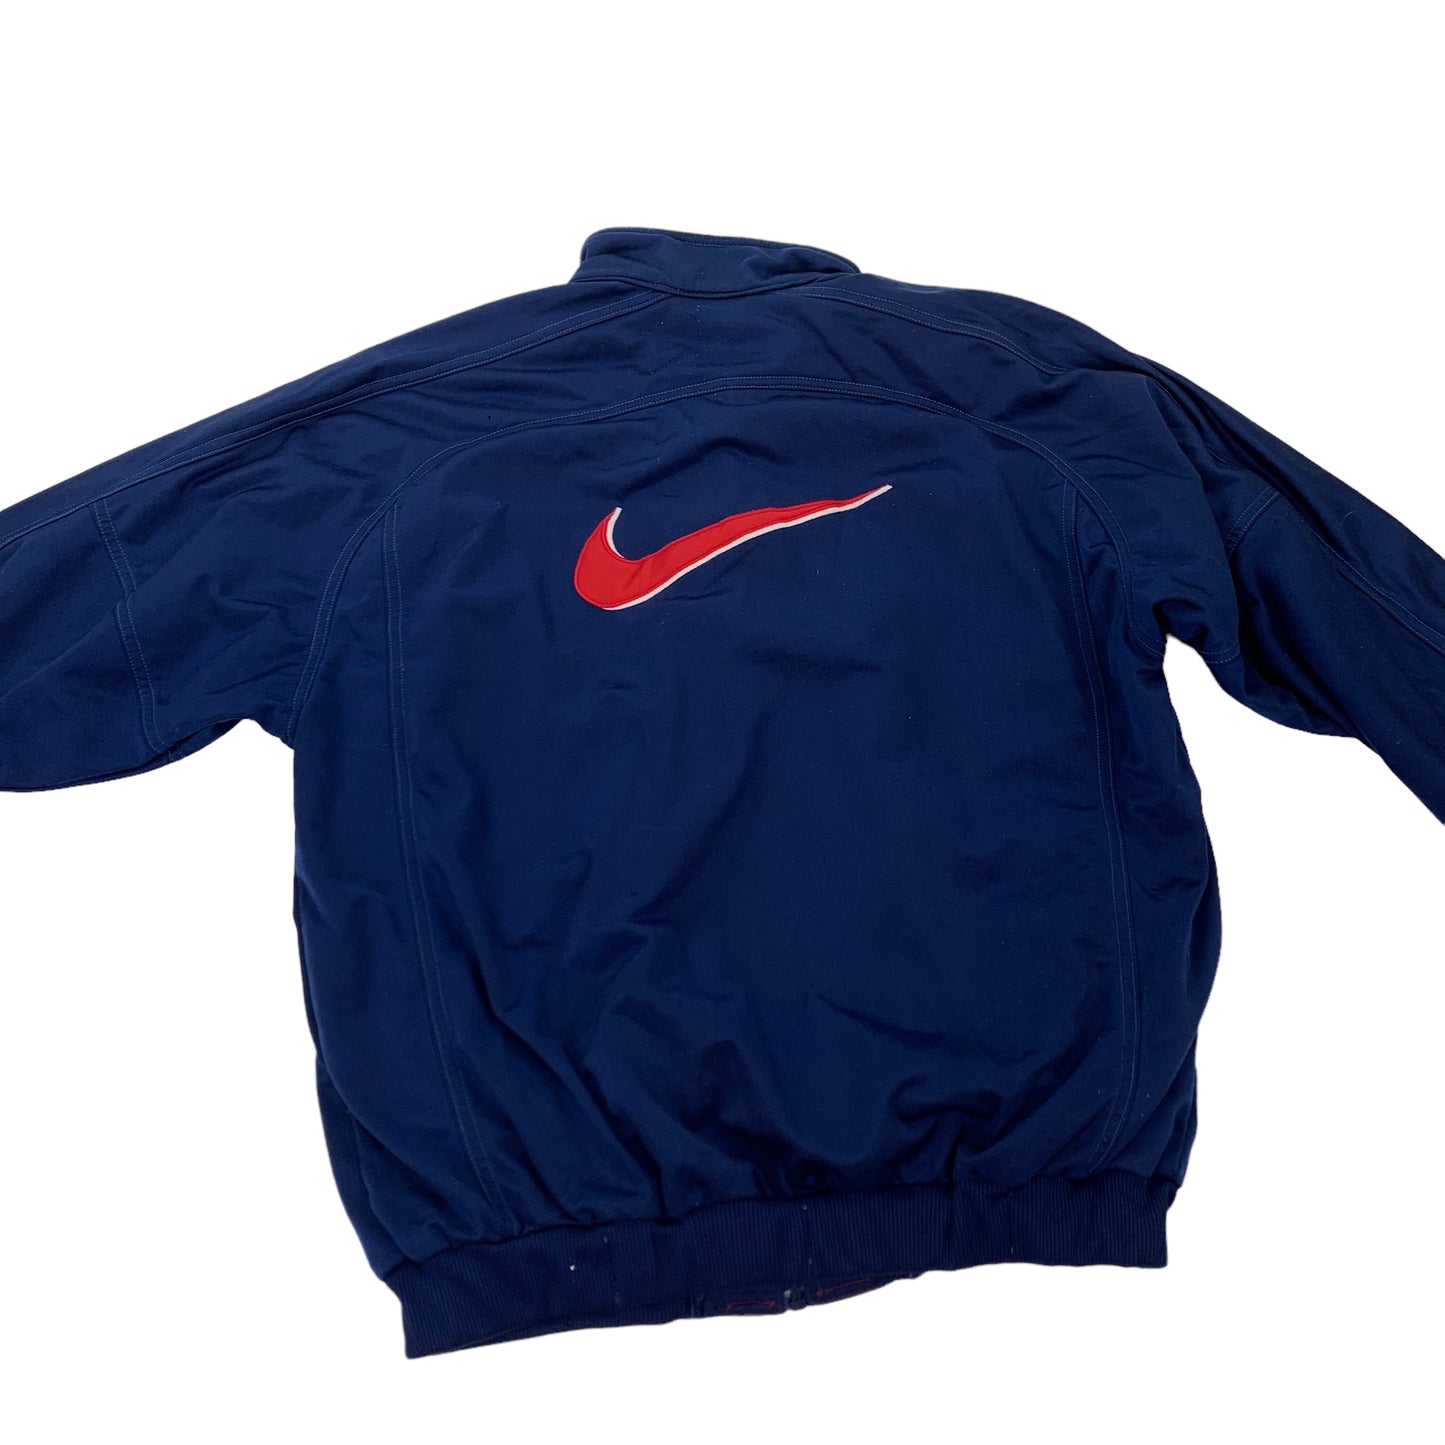 Nike Track Top Jacket - XL